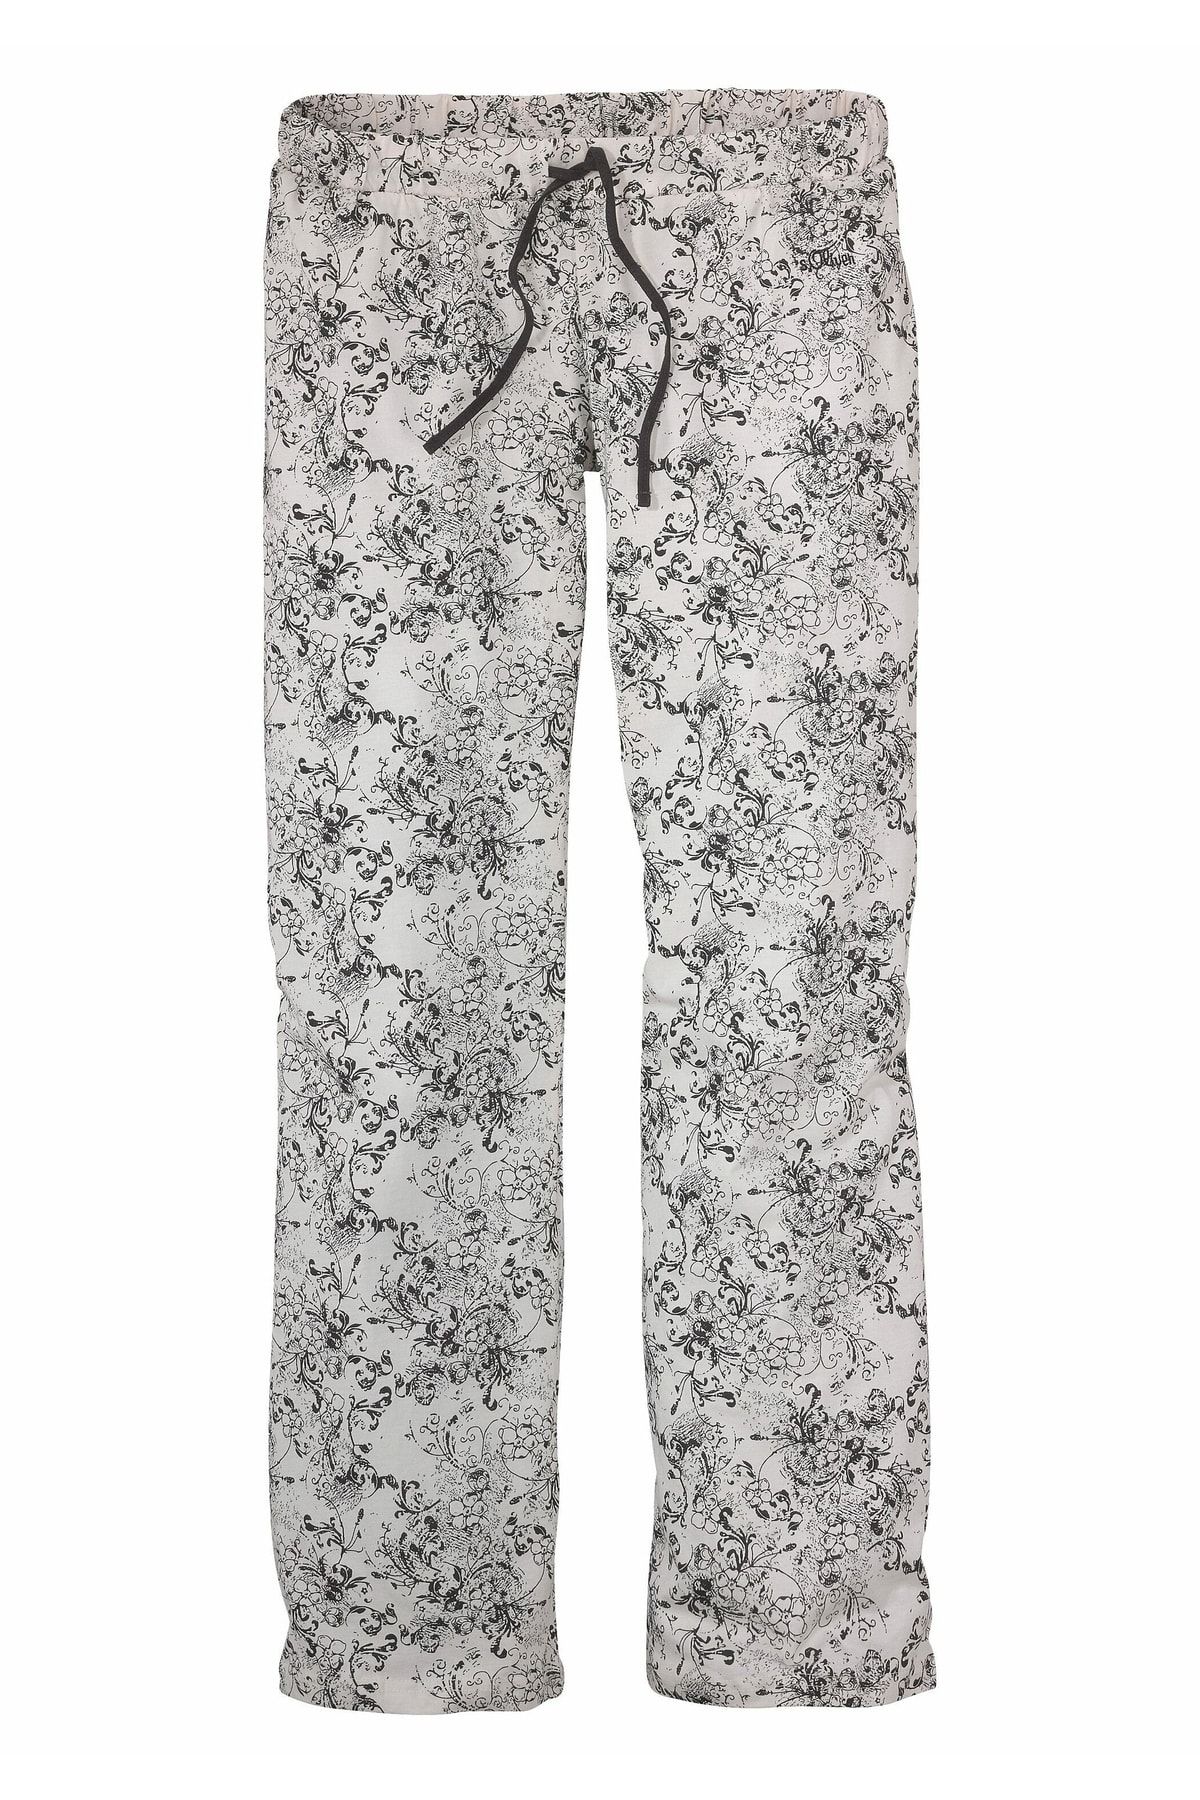 s.Oliver Pyjama set - Grau - Geblümt - Trendyol